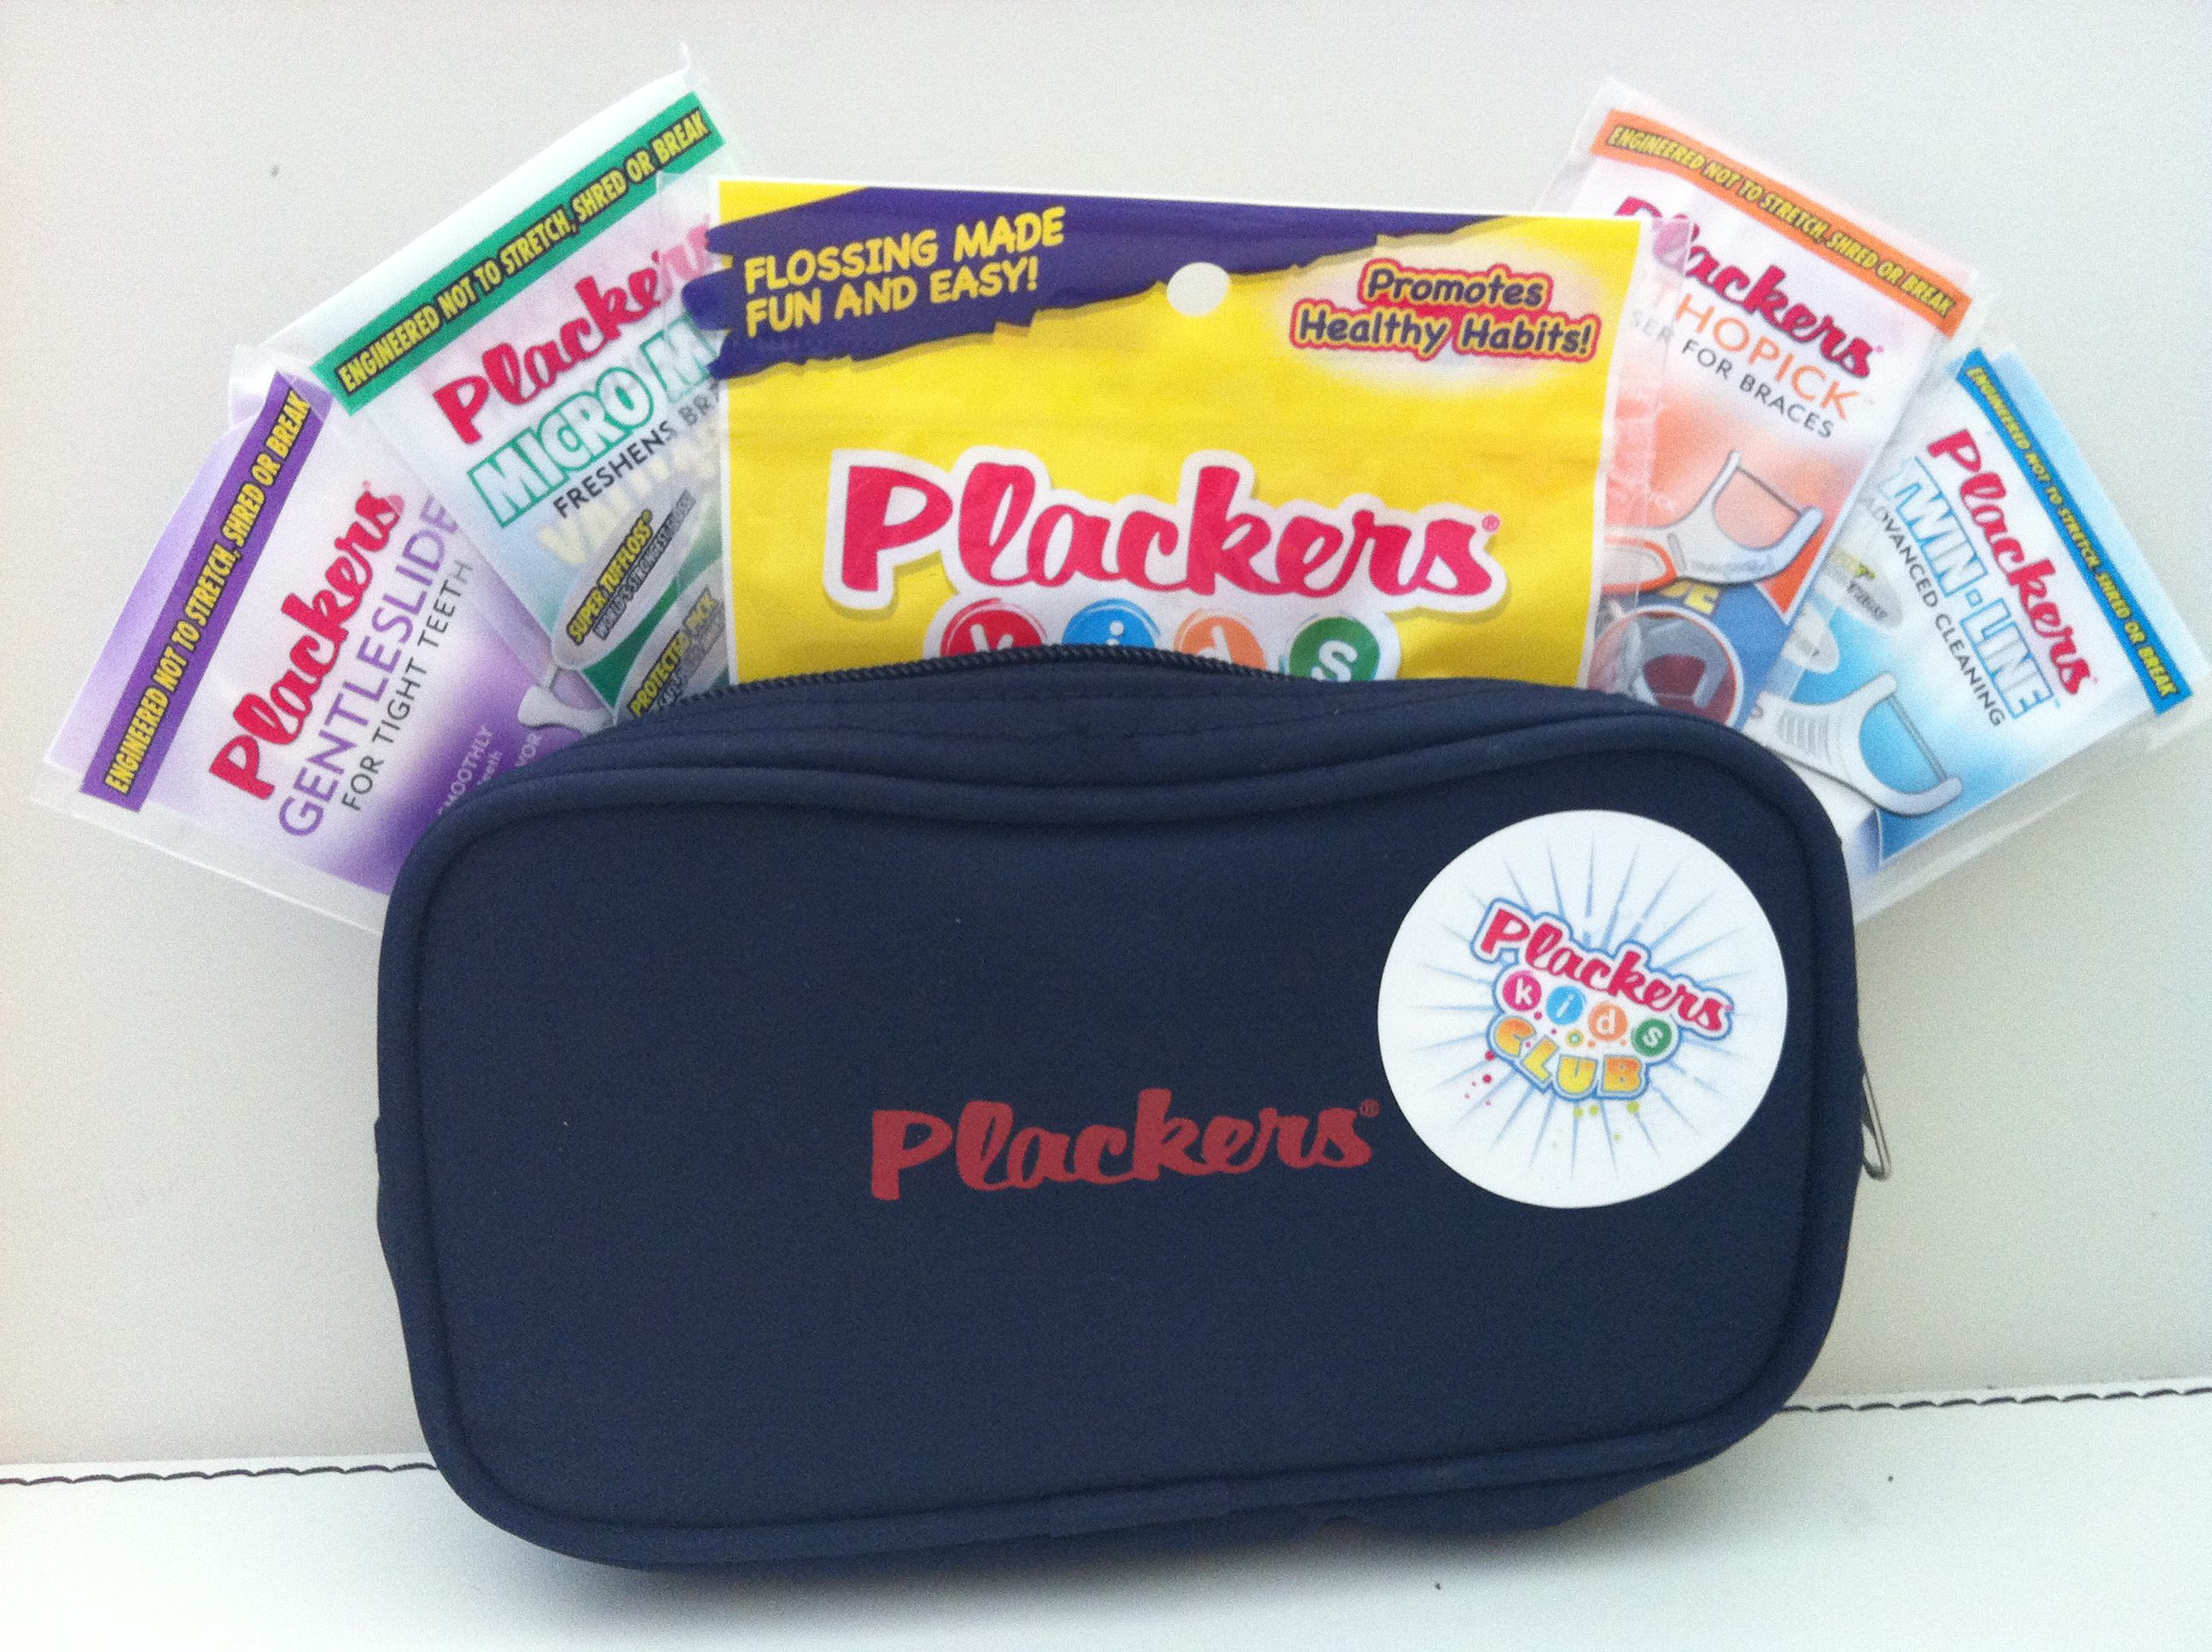 Plackers Kids Flossers + Vans Frozen Foods Gift Package Giveaway (ends 10/2)